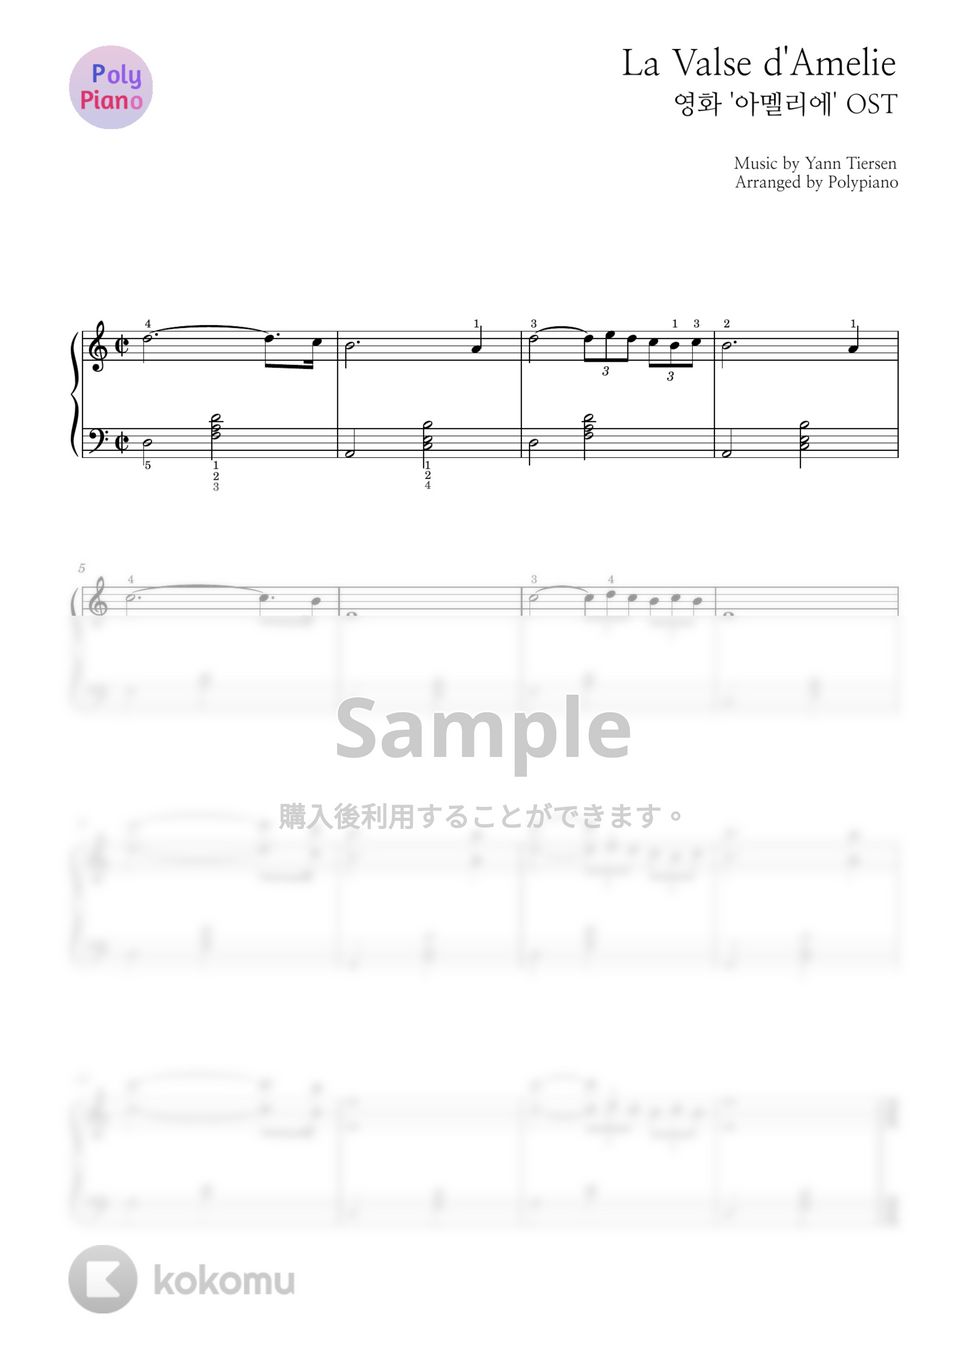 Yann Tiersen - La Valse d'Amelie (Amelie OST) by POLYPiano